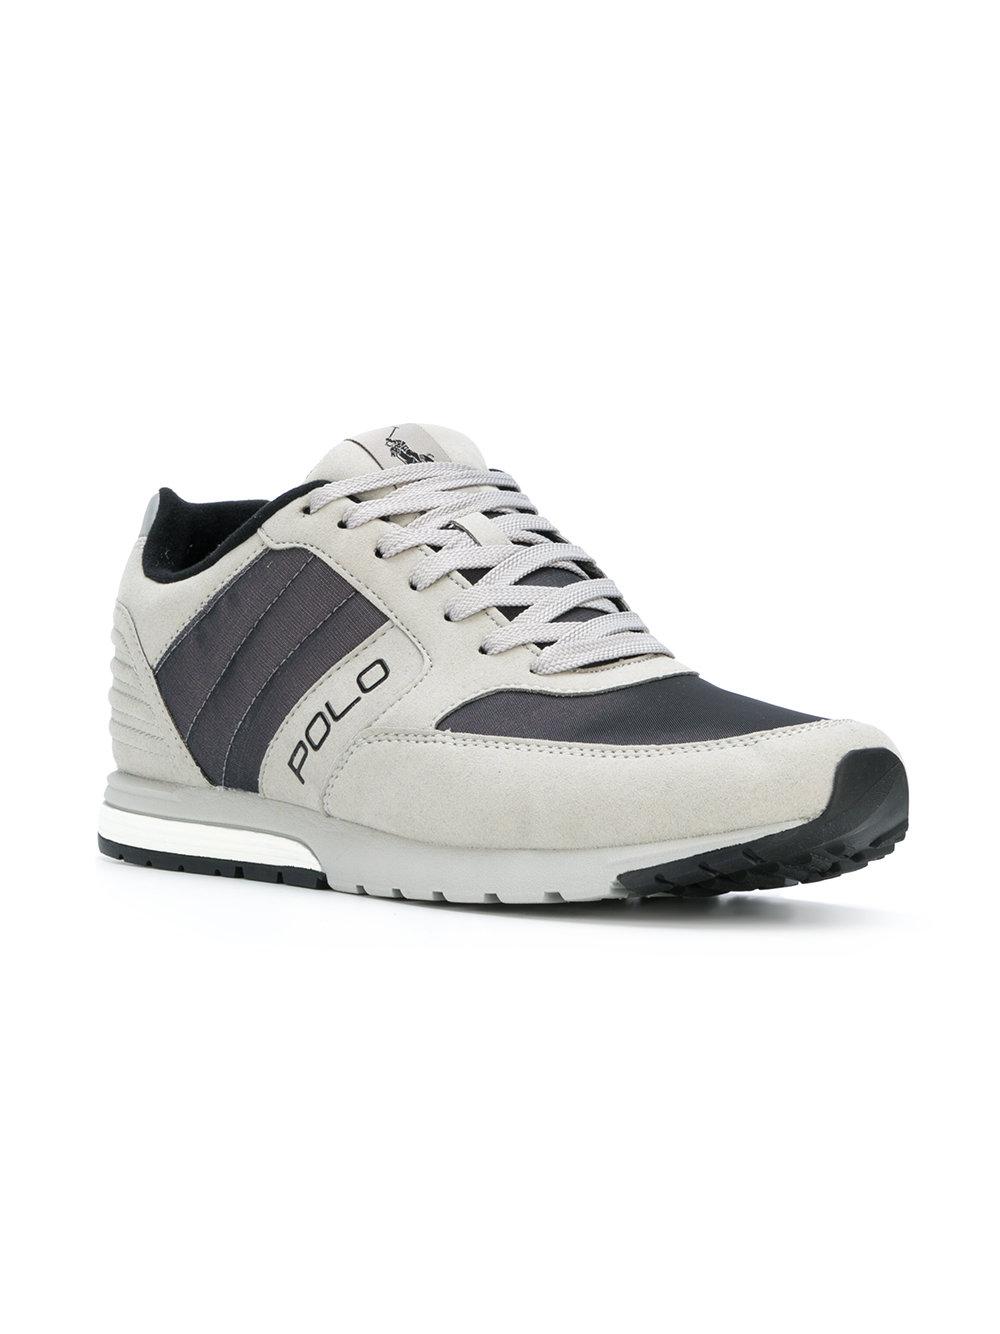 Polo Ralph Lauren Suede Laxman Tech Sneakers in Grey (Gray) for Men - Lyst